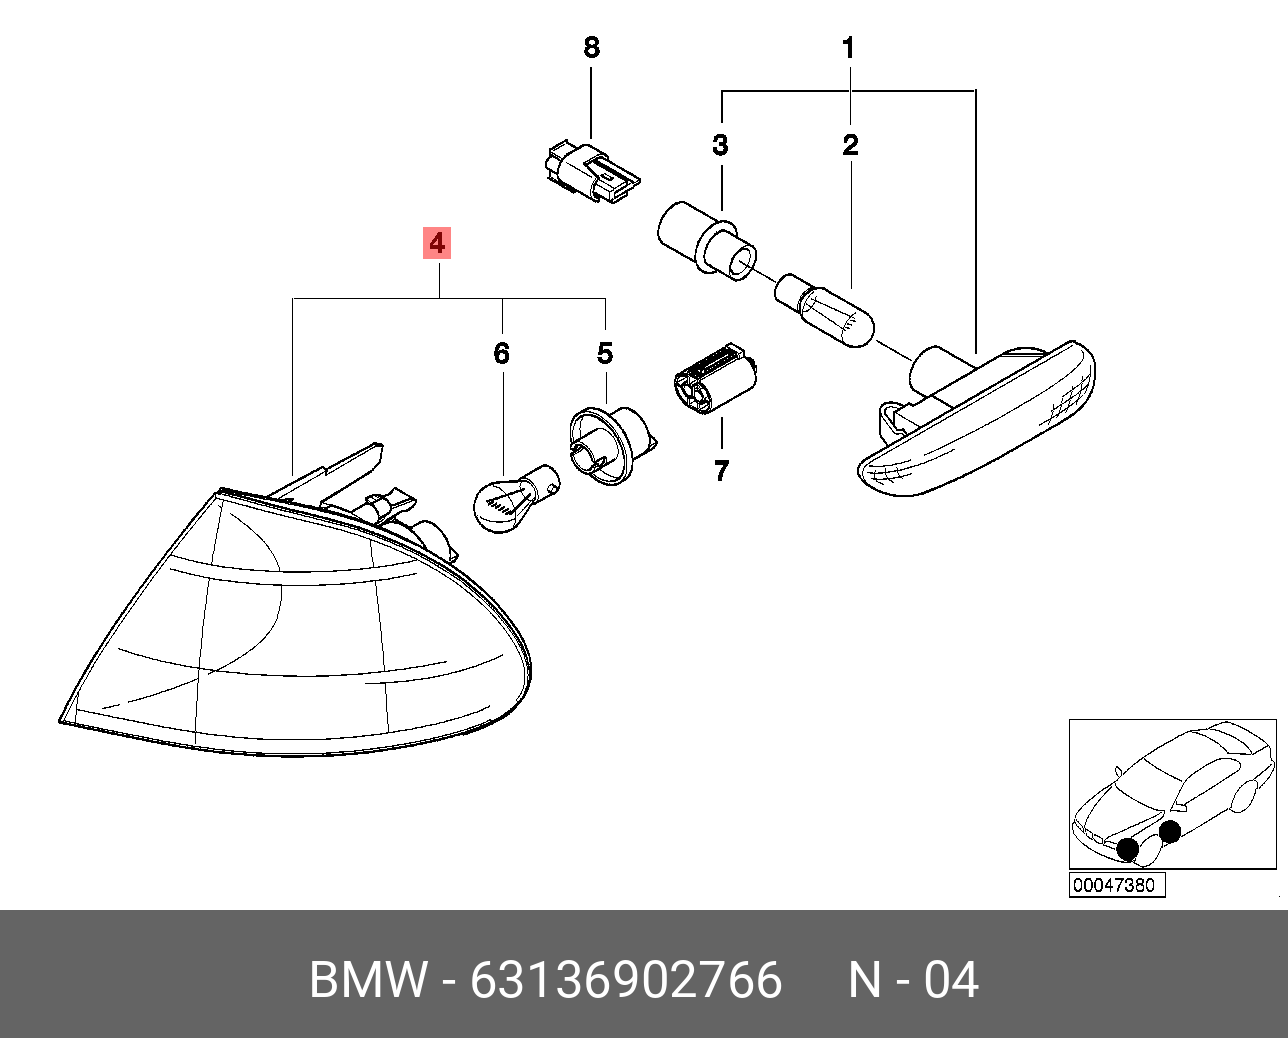 63 13 1. Указатель поворота BMW e46. BMW 63 21 7 160 900 лампа накаливания указателя поворота фары передней. БМВ 520 указатель поворота боковой. BMW 320i лампа указатель поворотника.